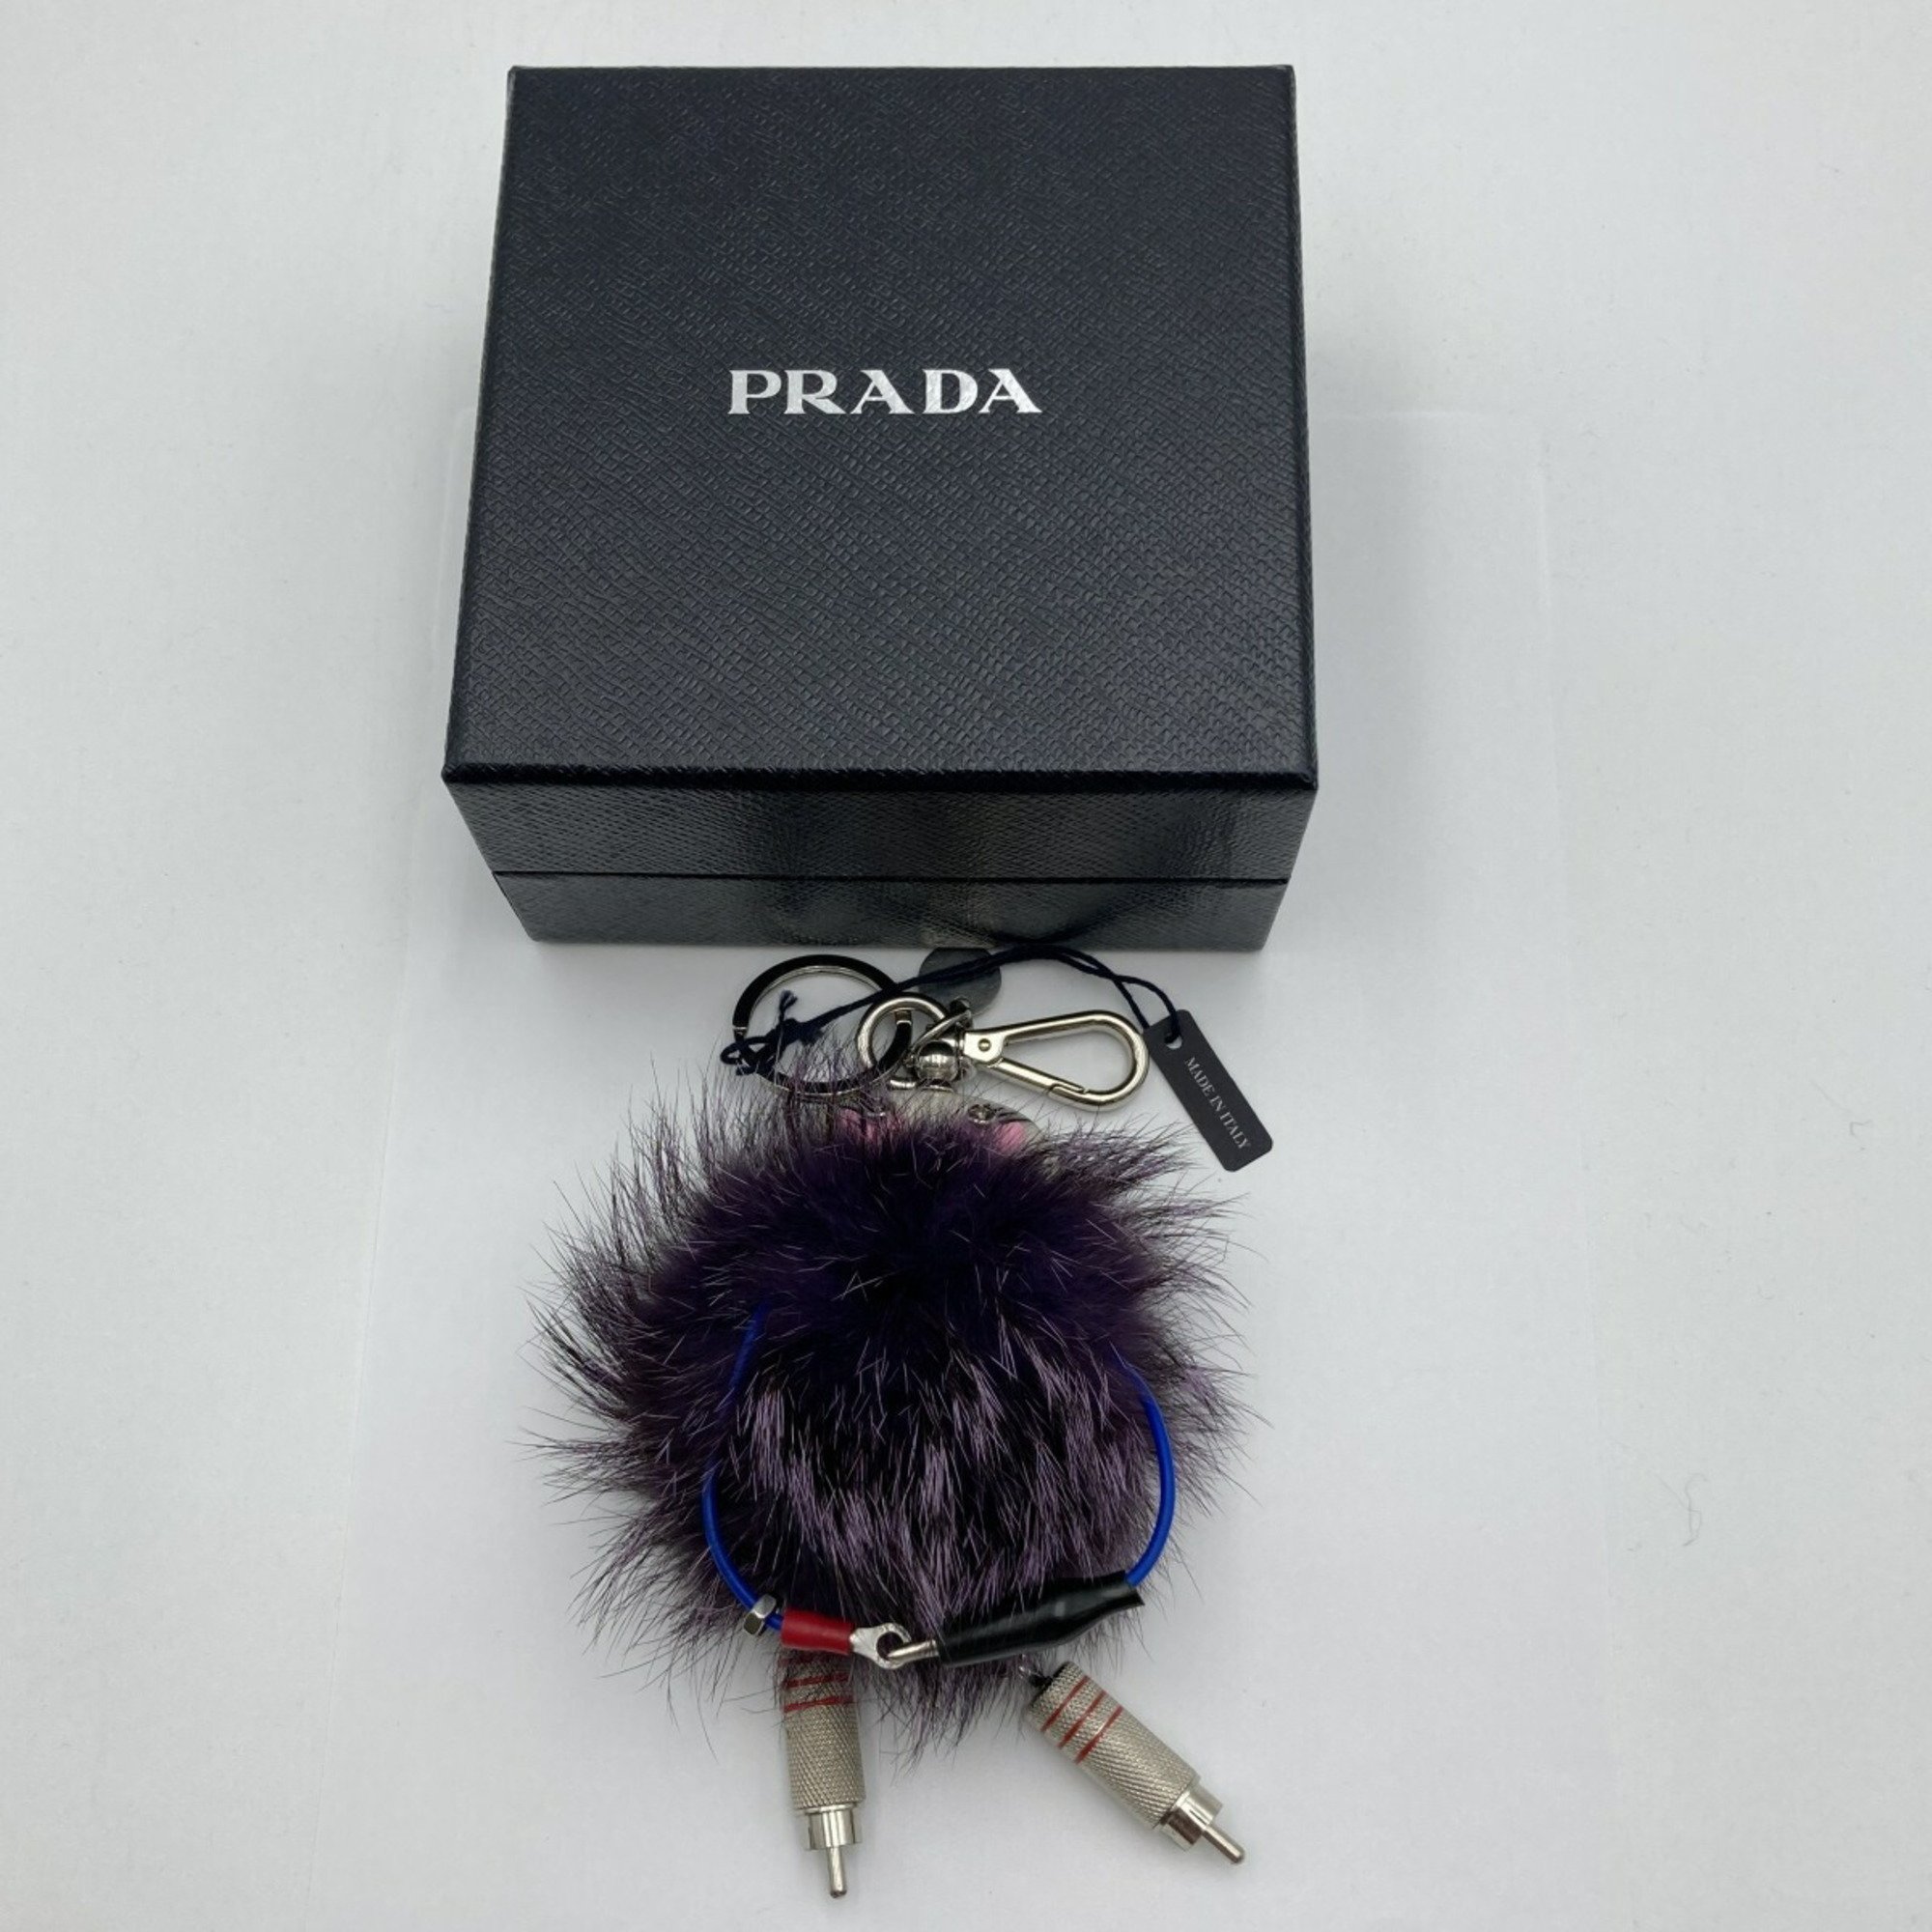 PRADA Prada key chain bag charm purple robot fur collar with box for men and women